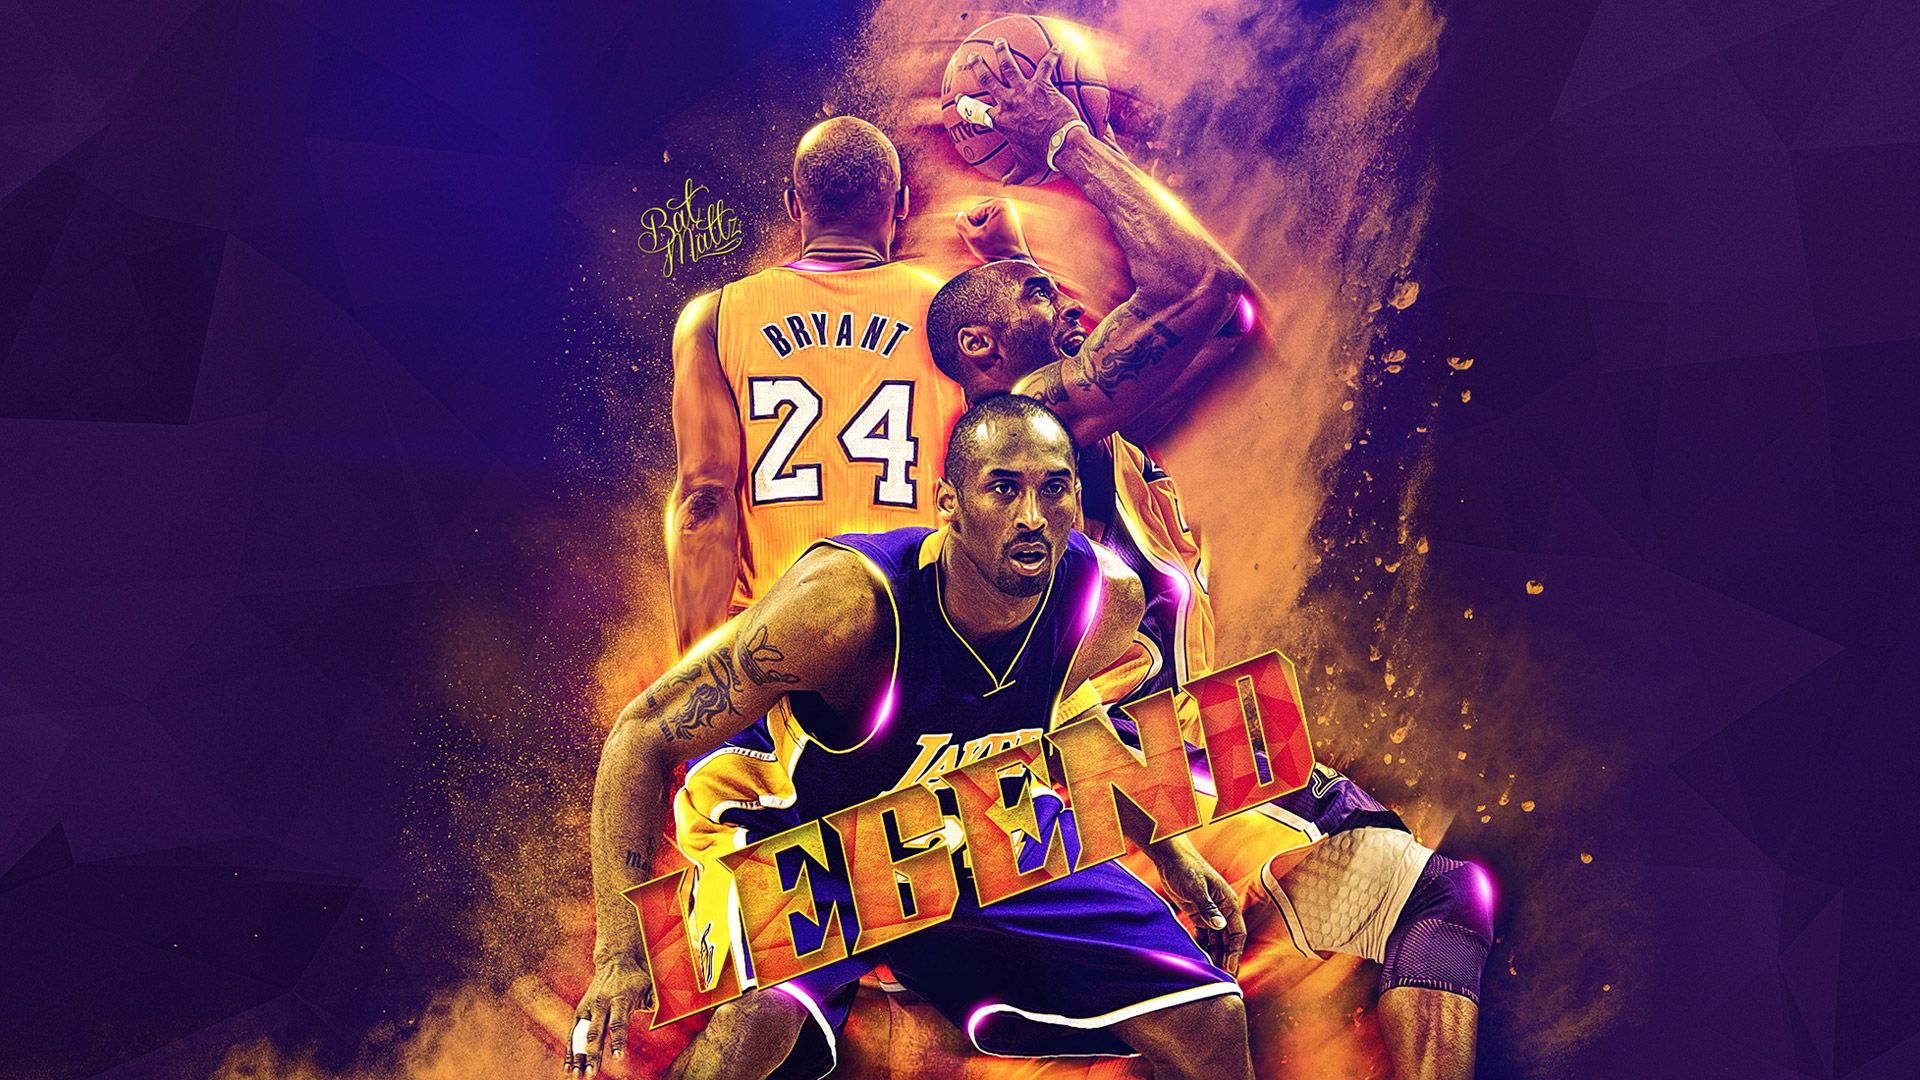 Kobe Bryant Vs Michael Jordan wallpaper free desktop background